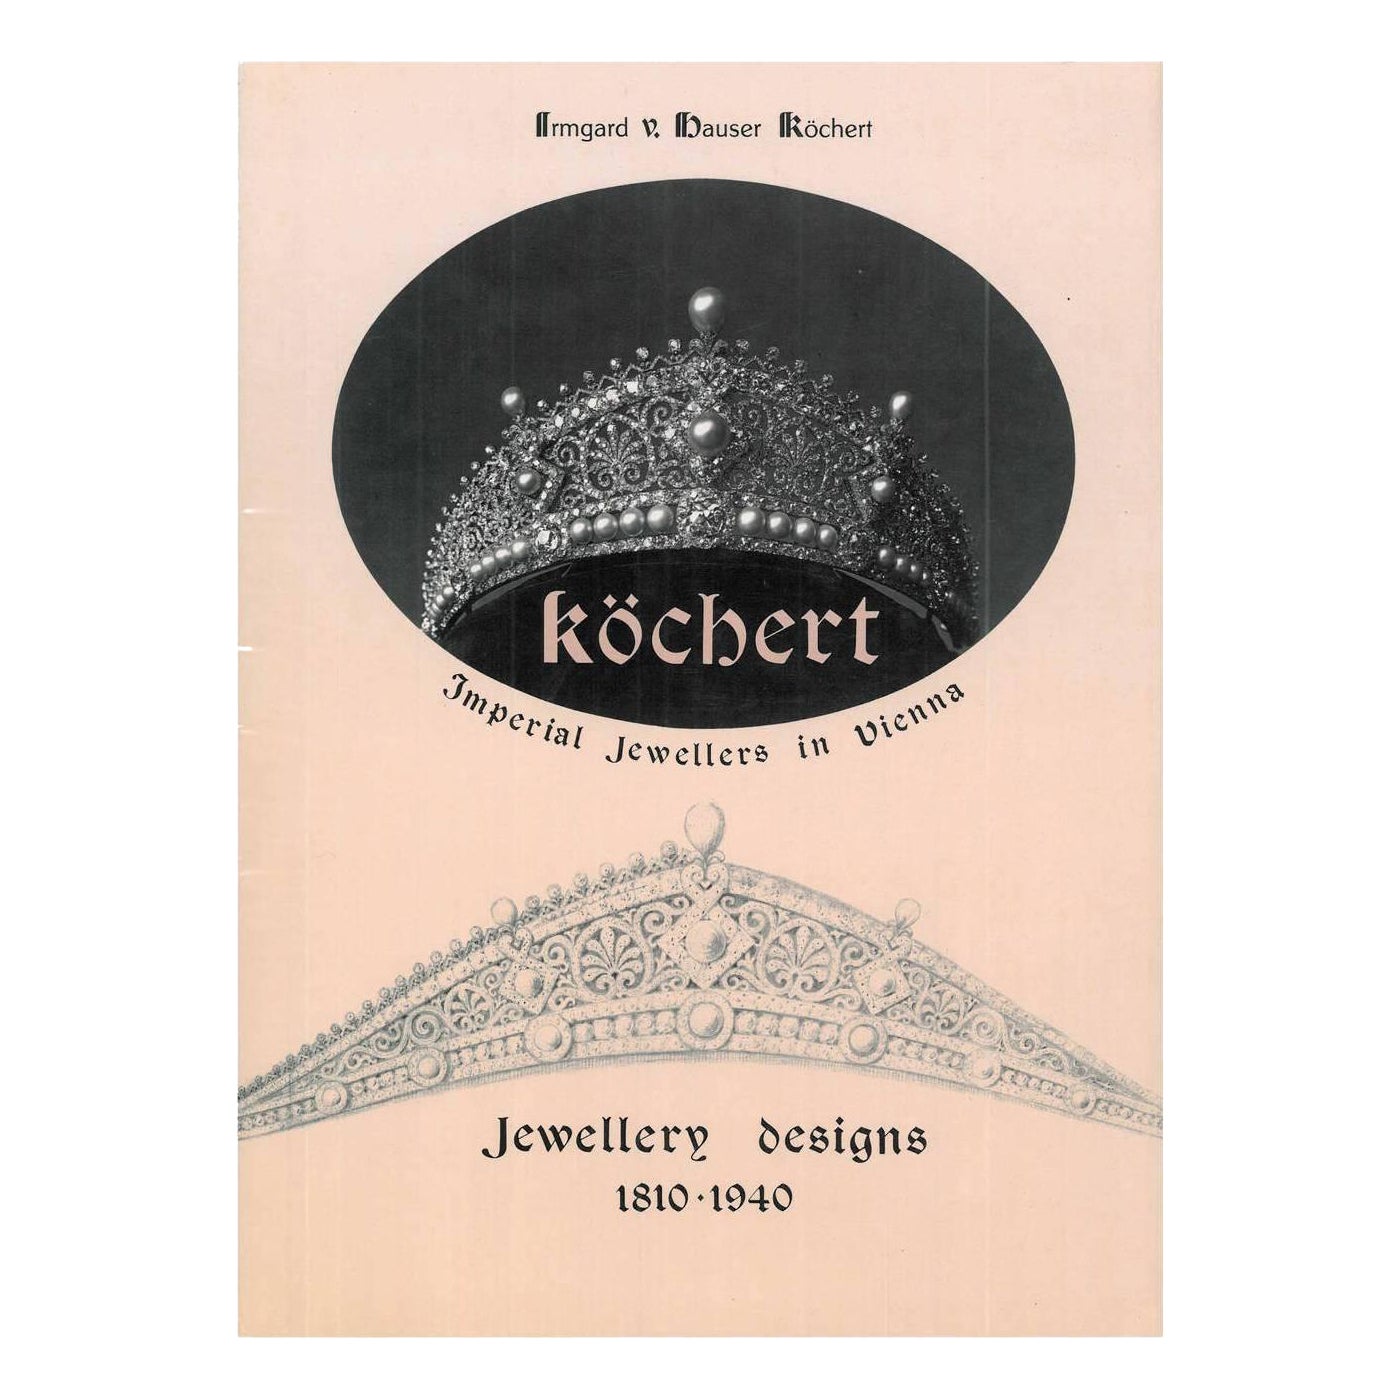 Kochert: Imperial Jewellers in Vienna: Jewellery Designs 1810-1940 (Book) For Sale